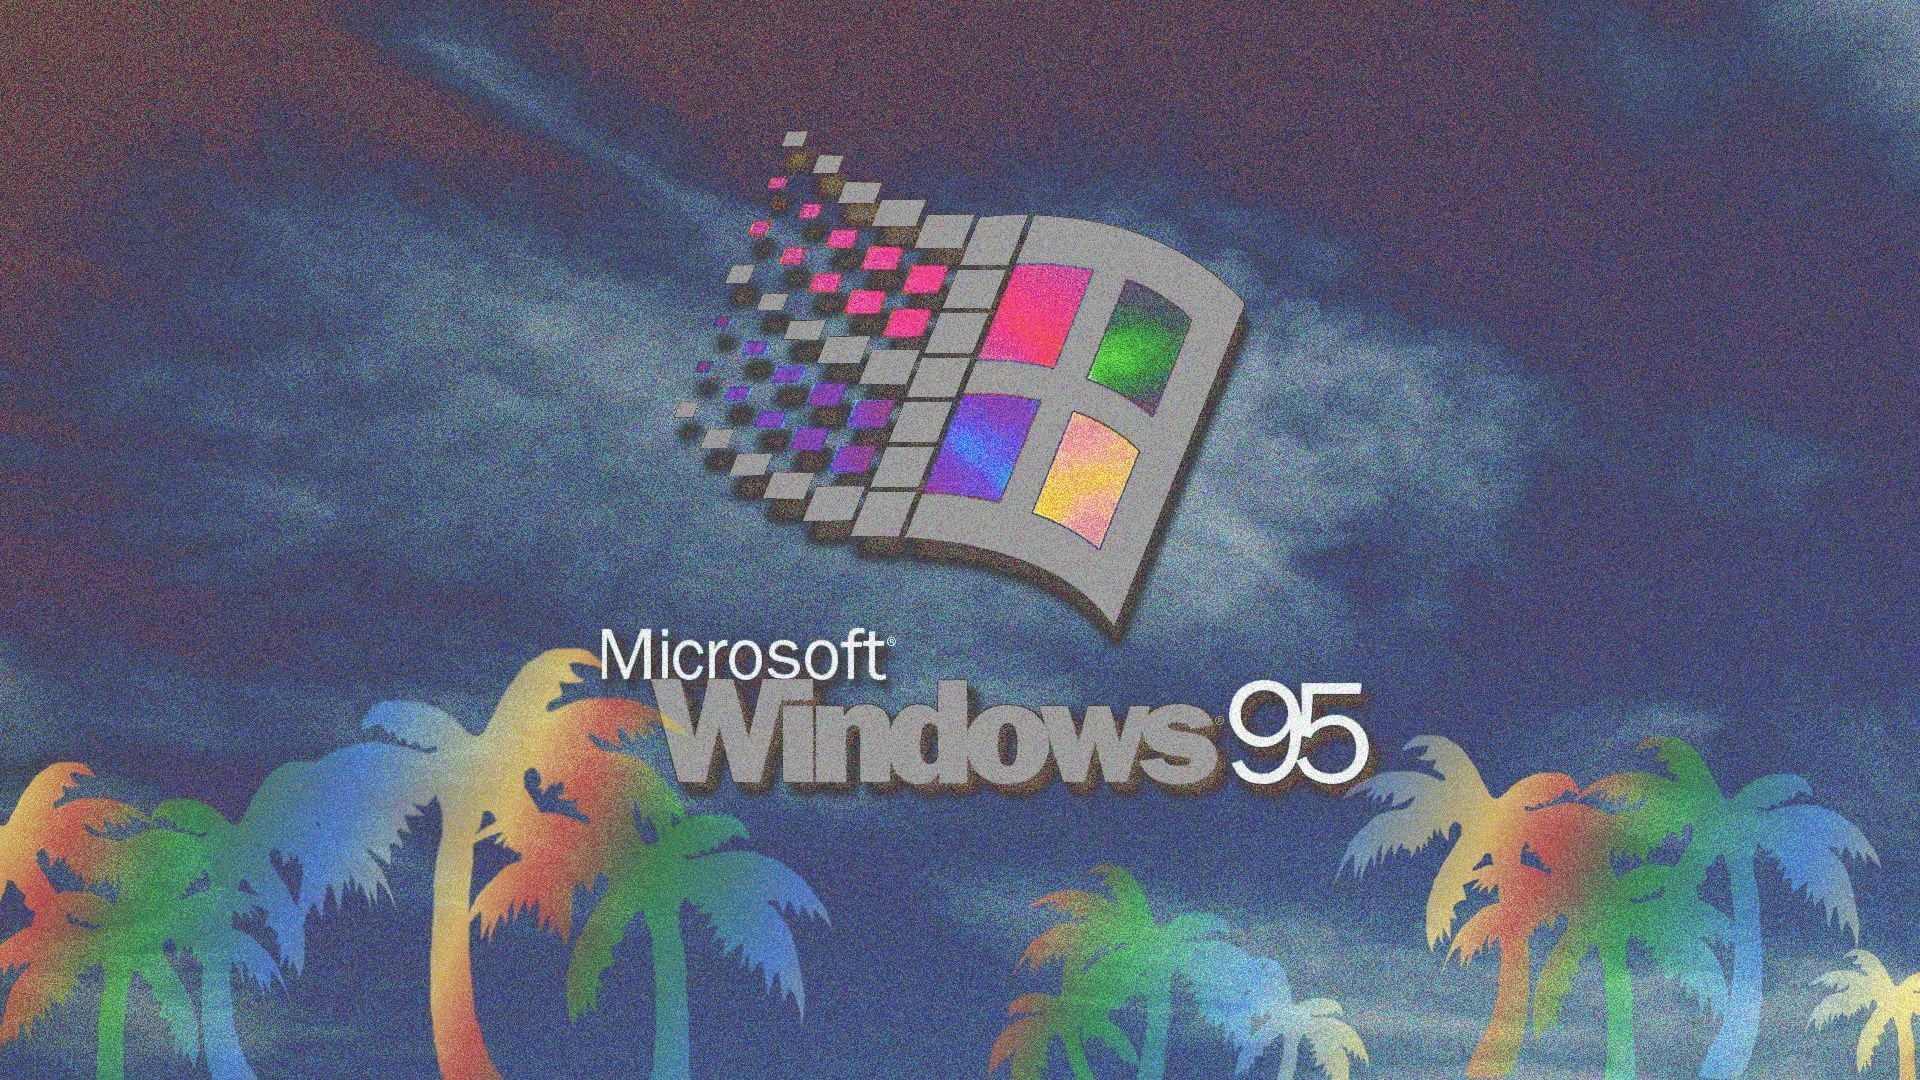 Artistic #Vaporwave #Aesthetic #Windows Windows 95 P #wallpaper #hdwallpaper #desktop. Vaporwave wallpaper, Aesthetic desktop wallpaper, Windows wallpaper